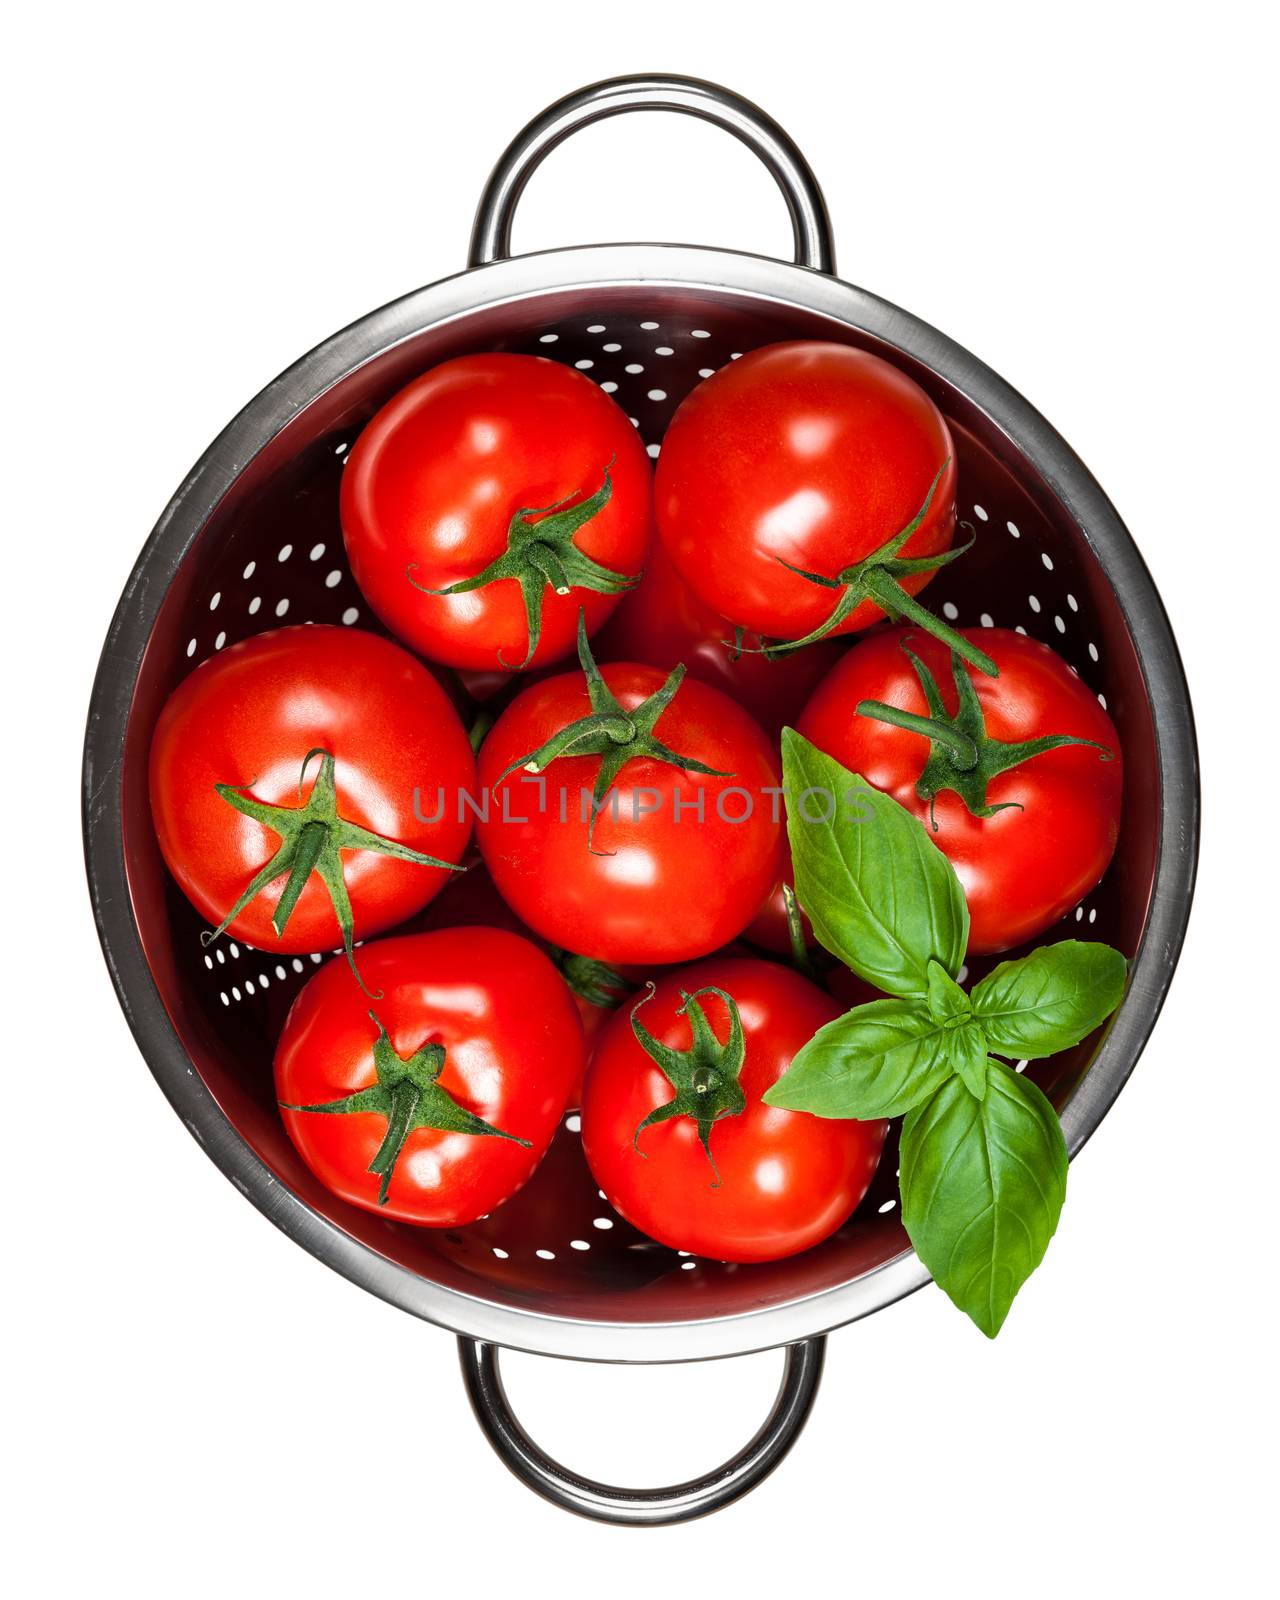 Tomatoes With Basil by bozena_fulawka